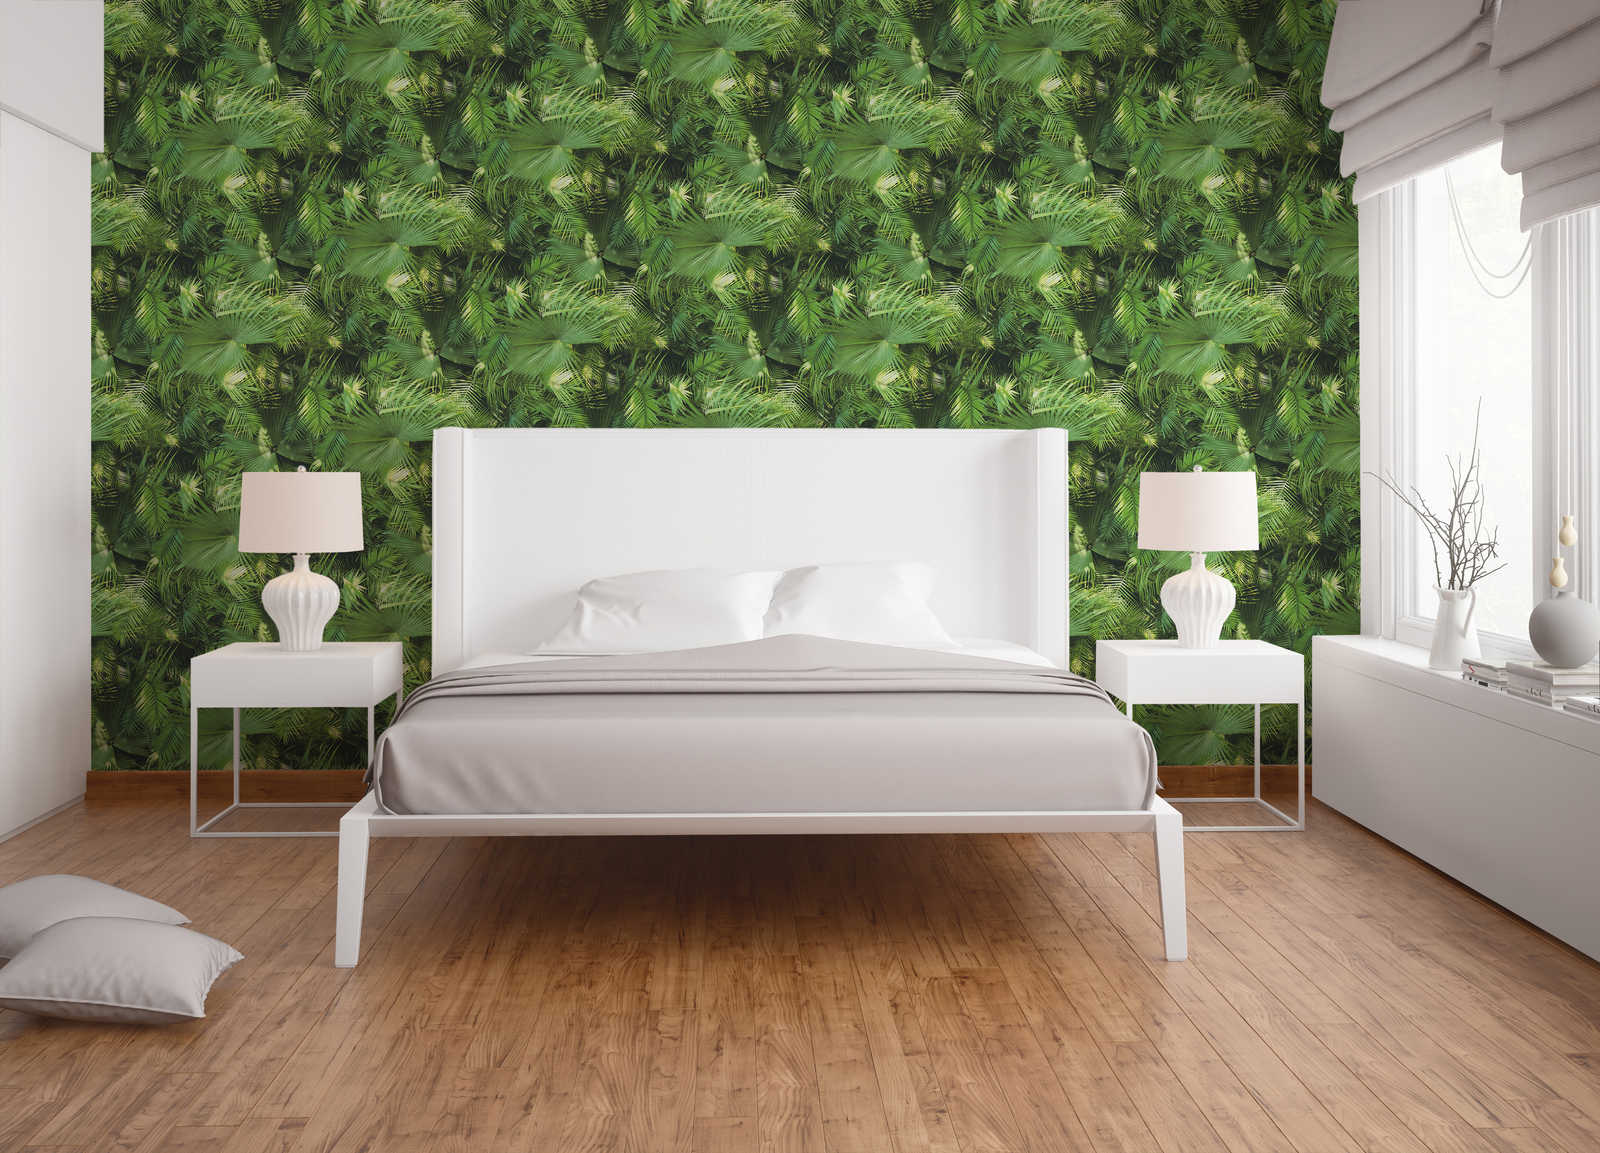             Zelfklevend behang | jungle bladeren patroon groene jungle
        